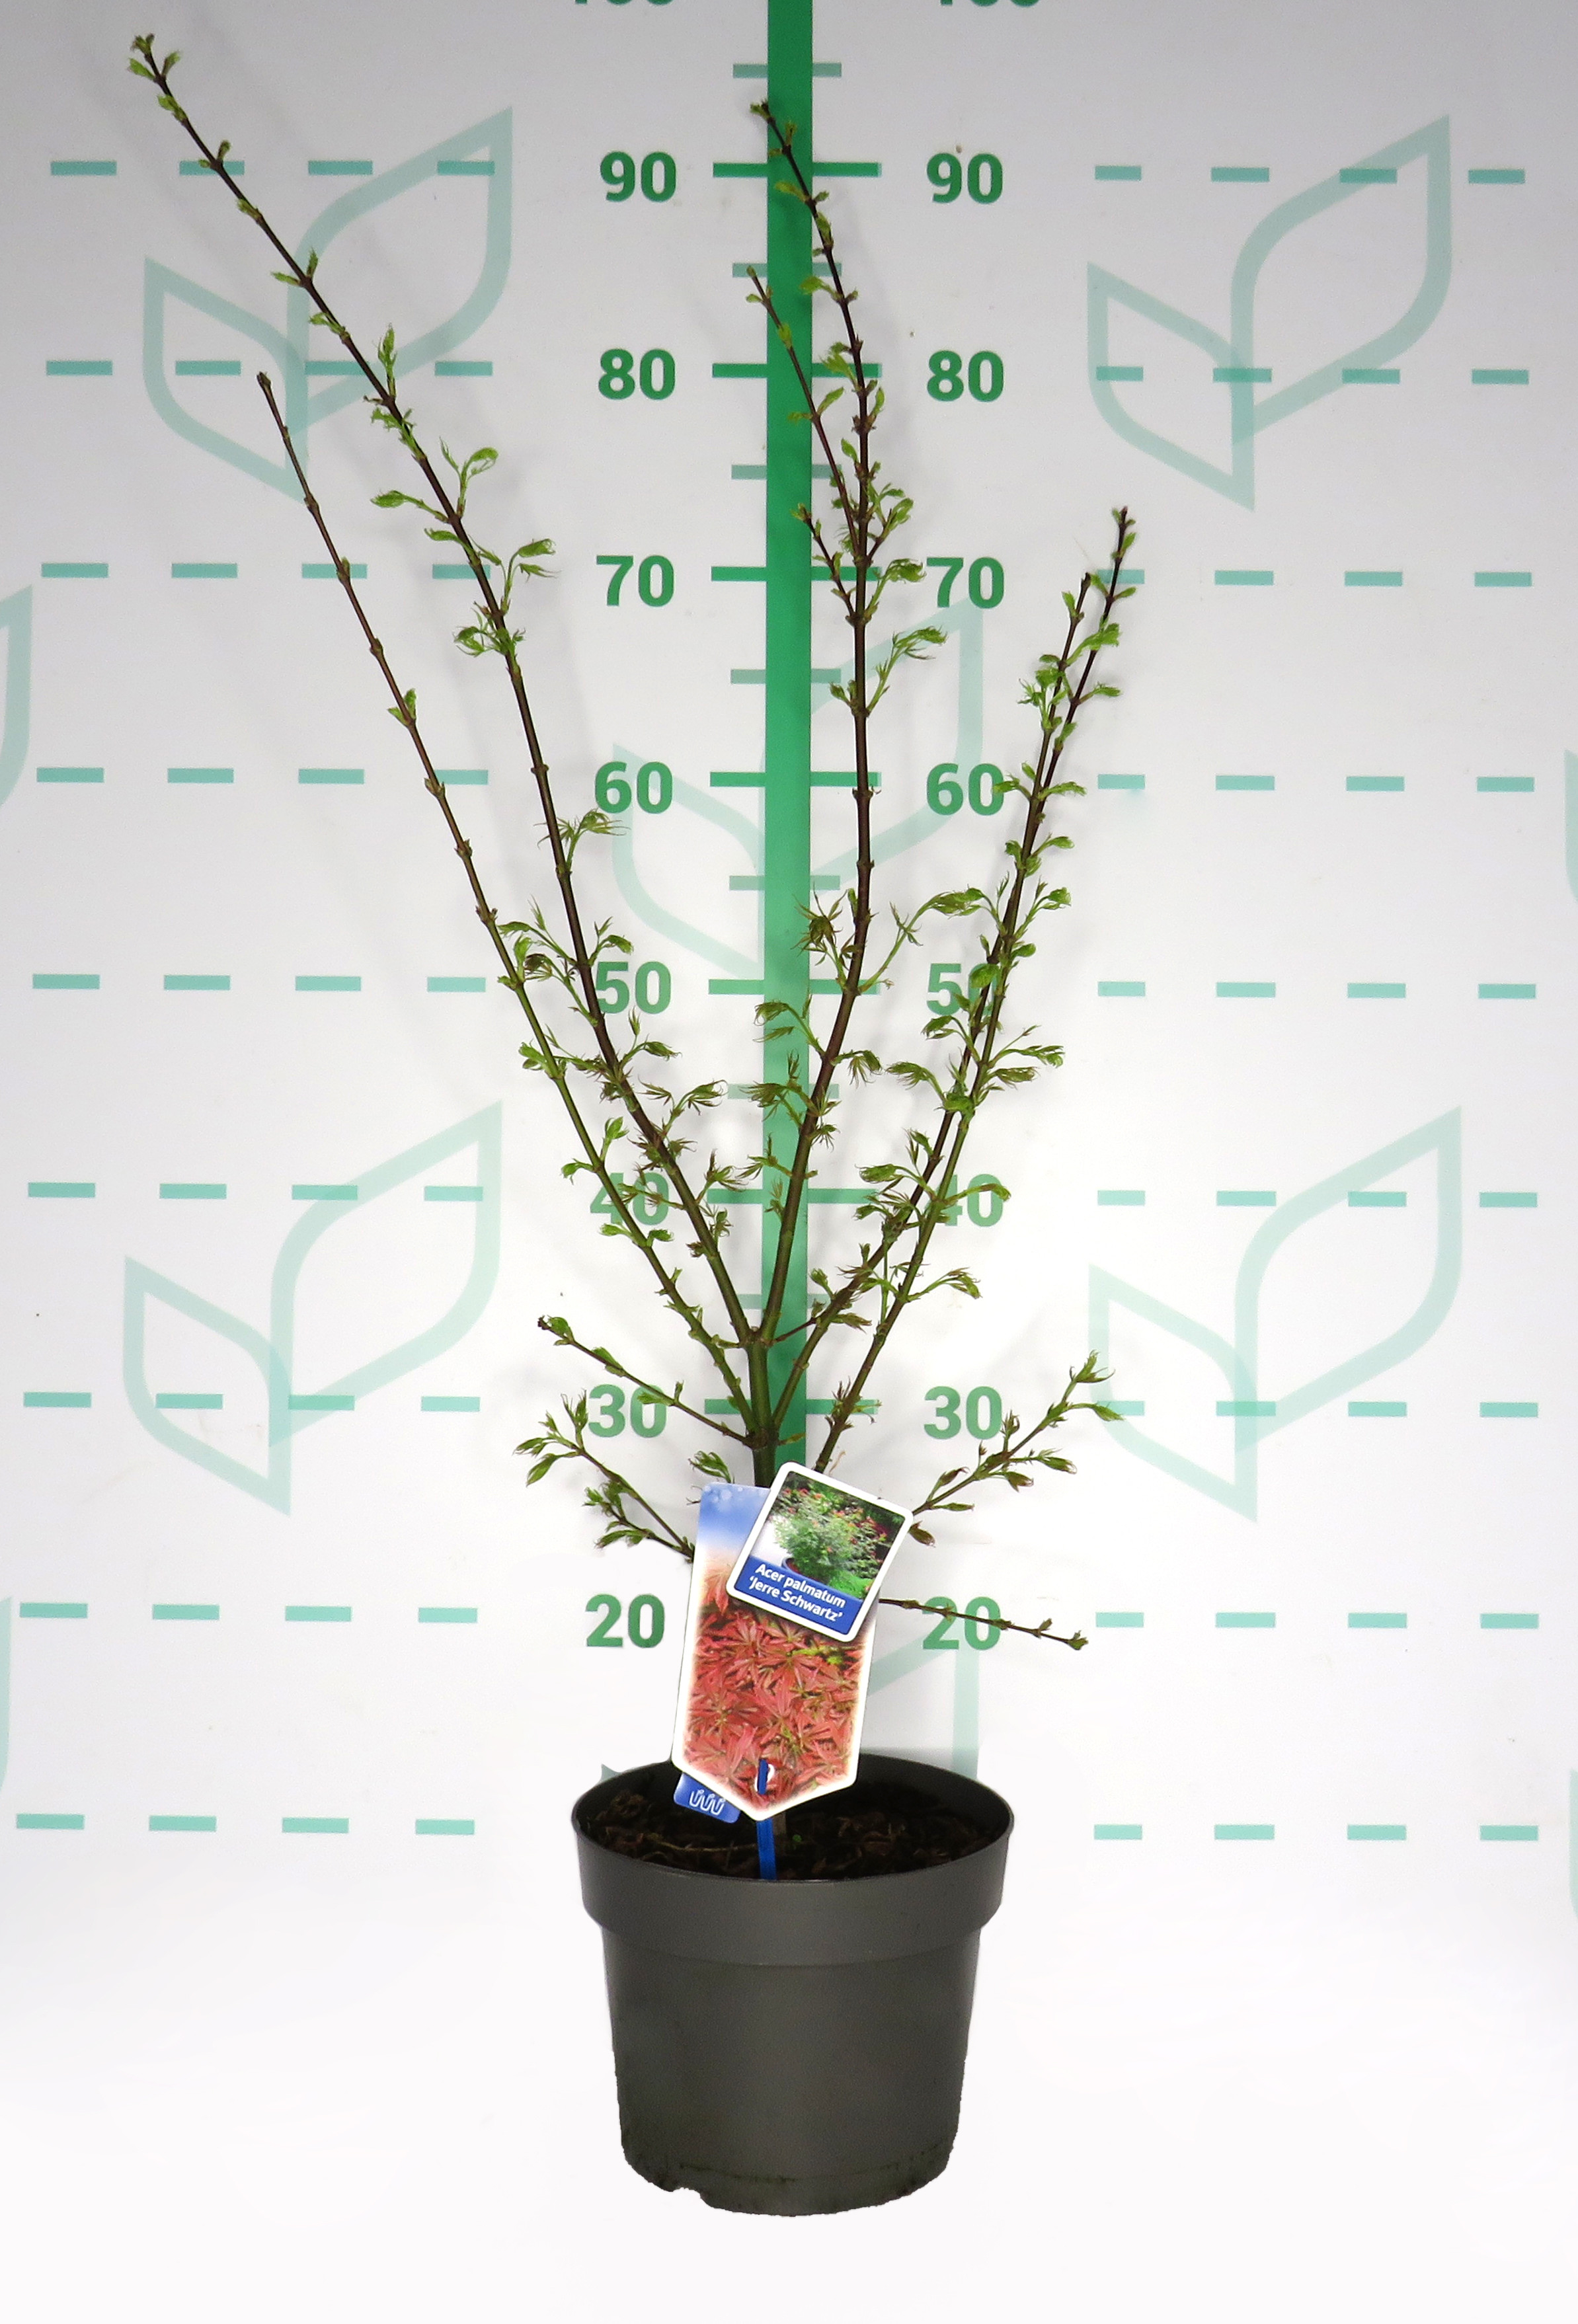 Acer palmatum "Jerre Schwartz" 3L 50/60